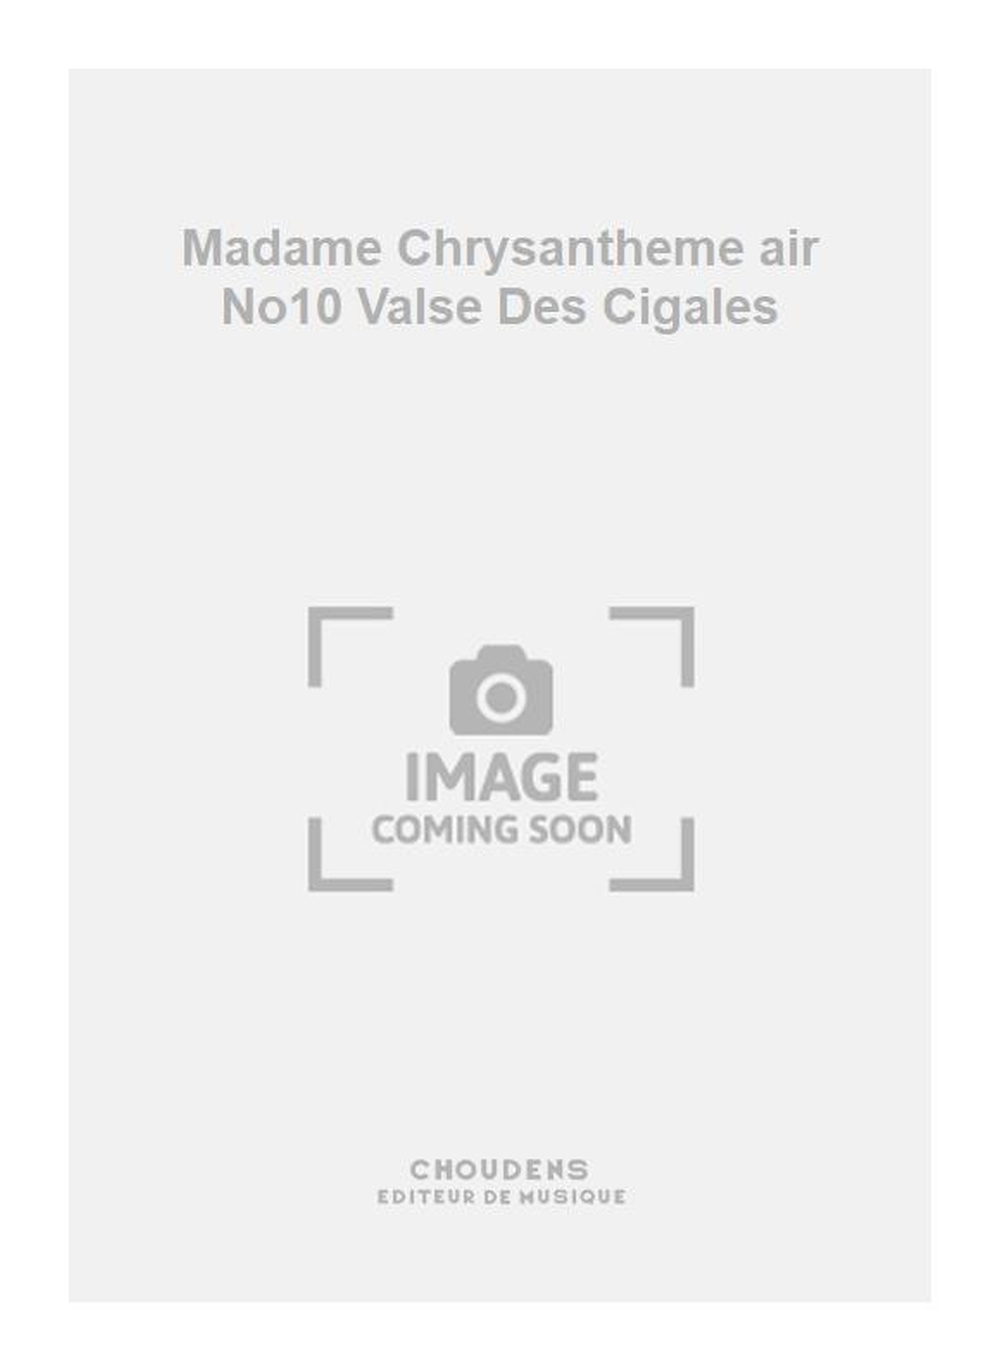 Messager: Madame Chrysantheme air No10 Valse Des Cigales